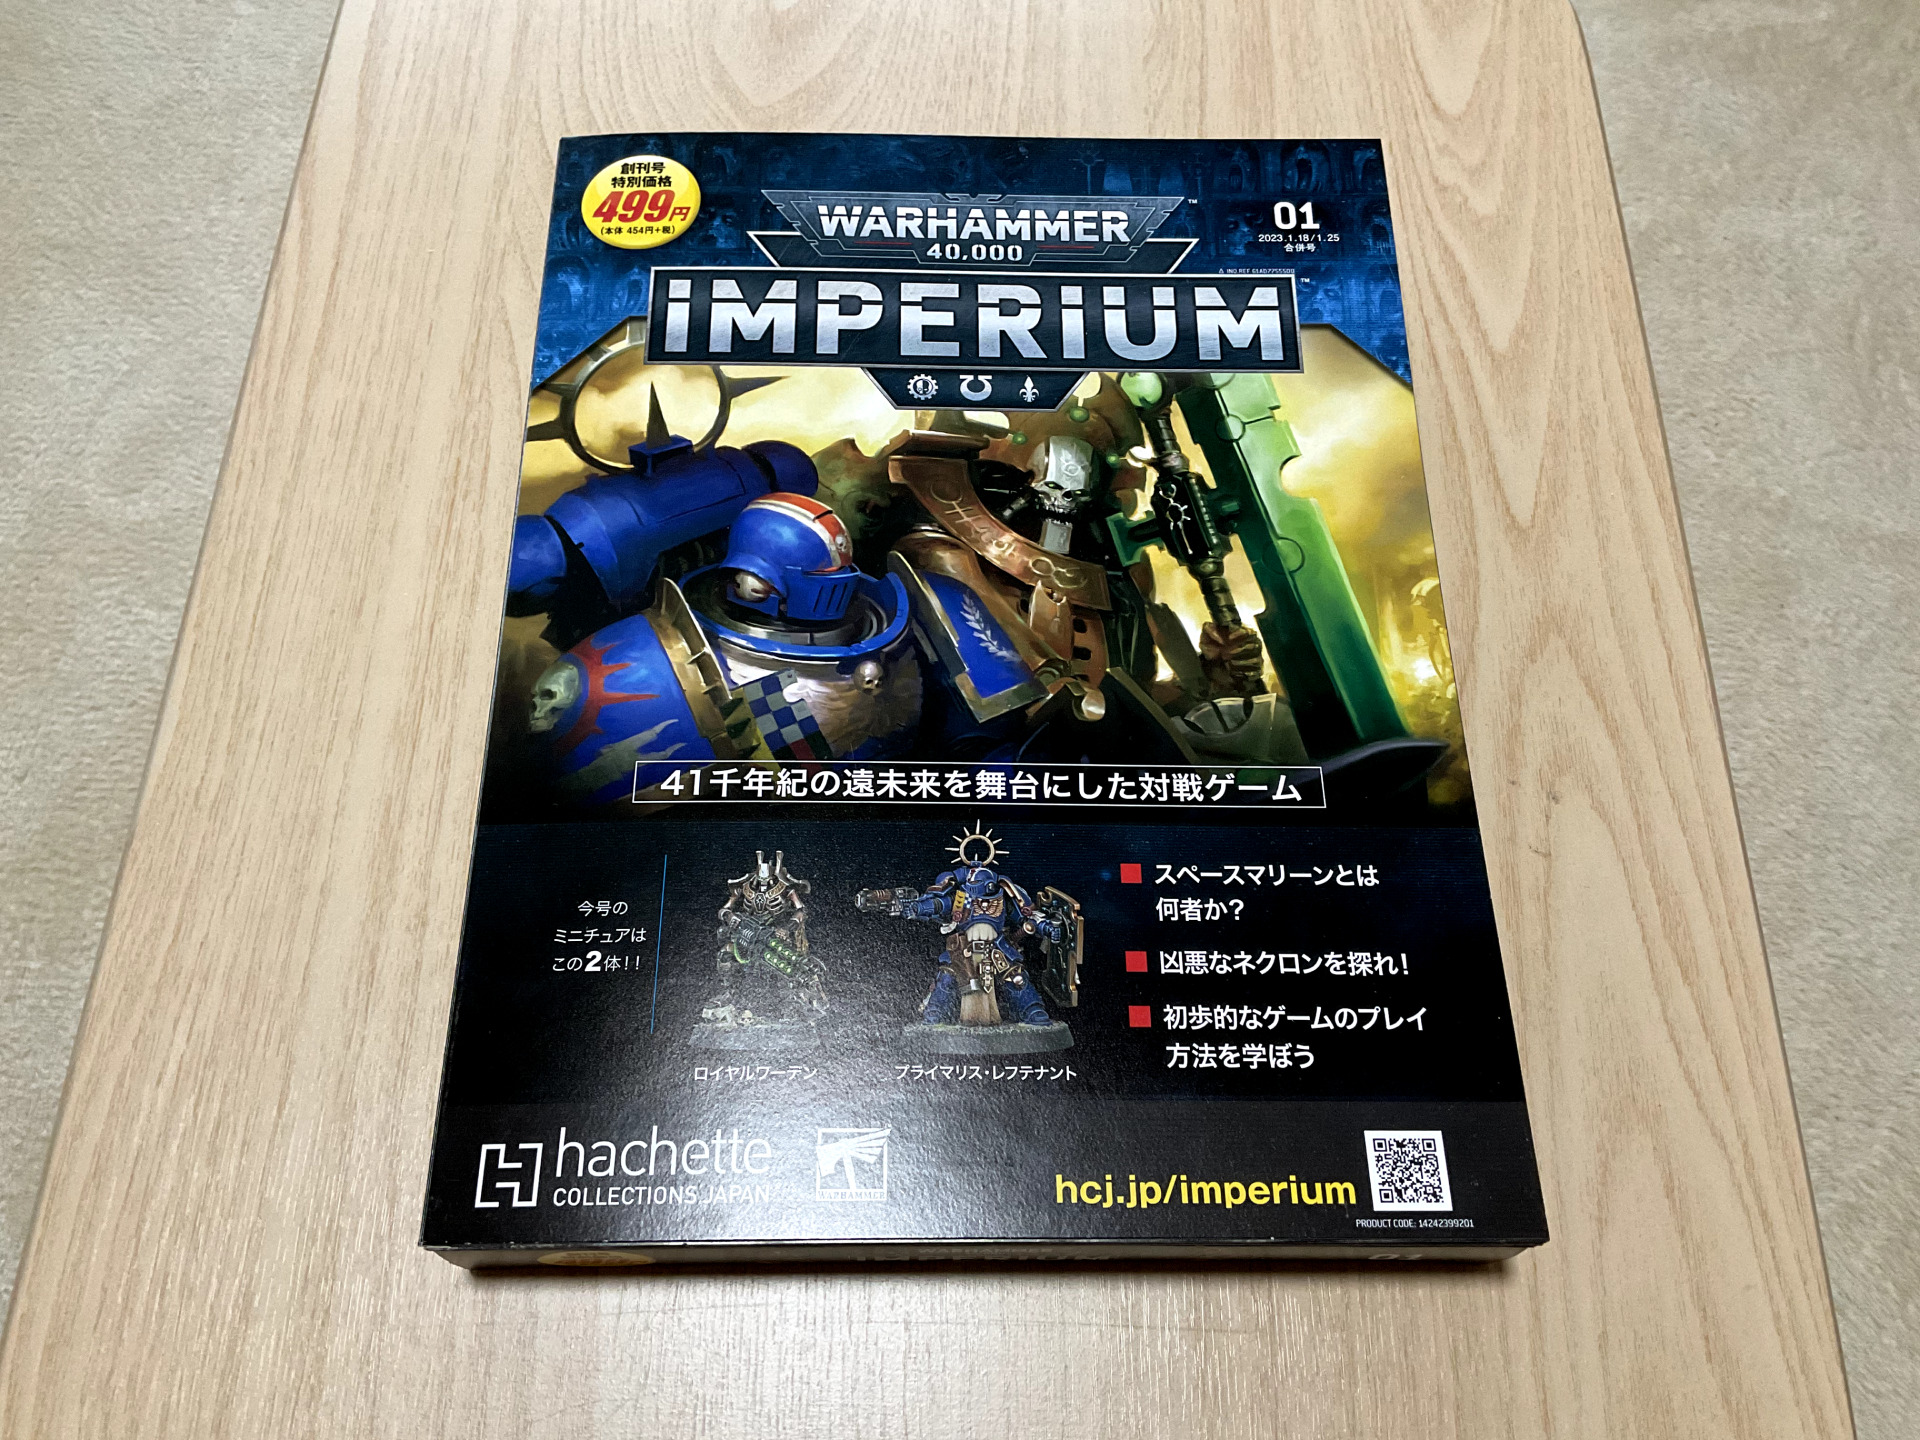 <span class="title">【Warhammer】 週刊Warhammerの創刊号を購入した</span>